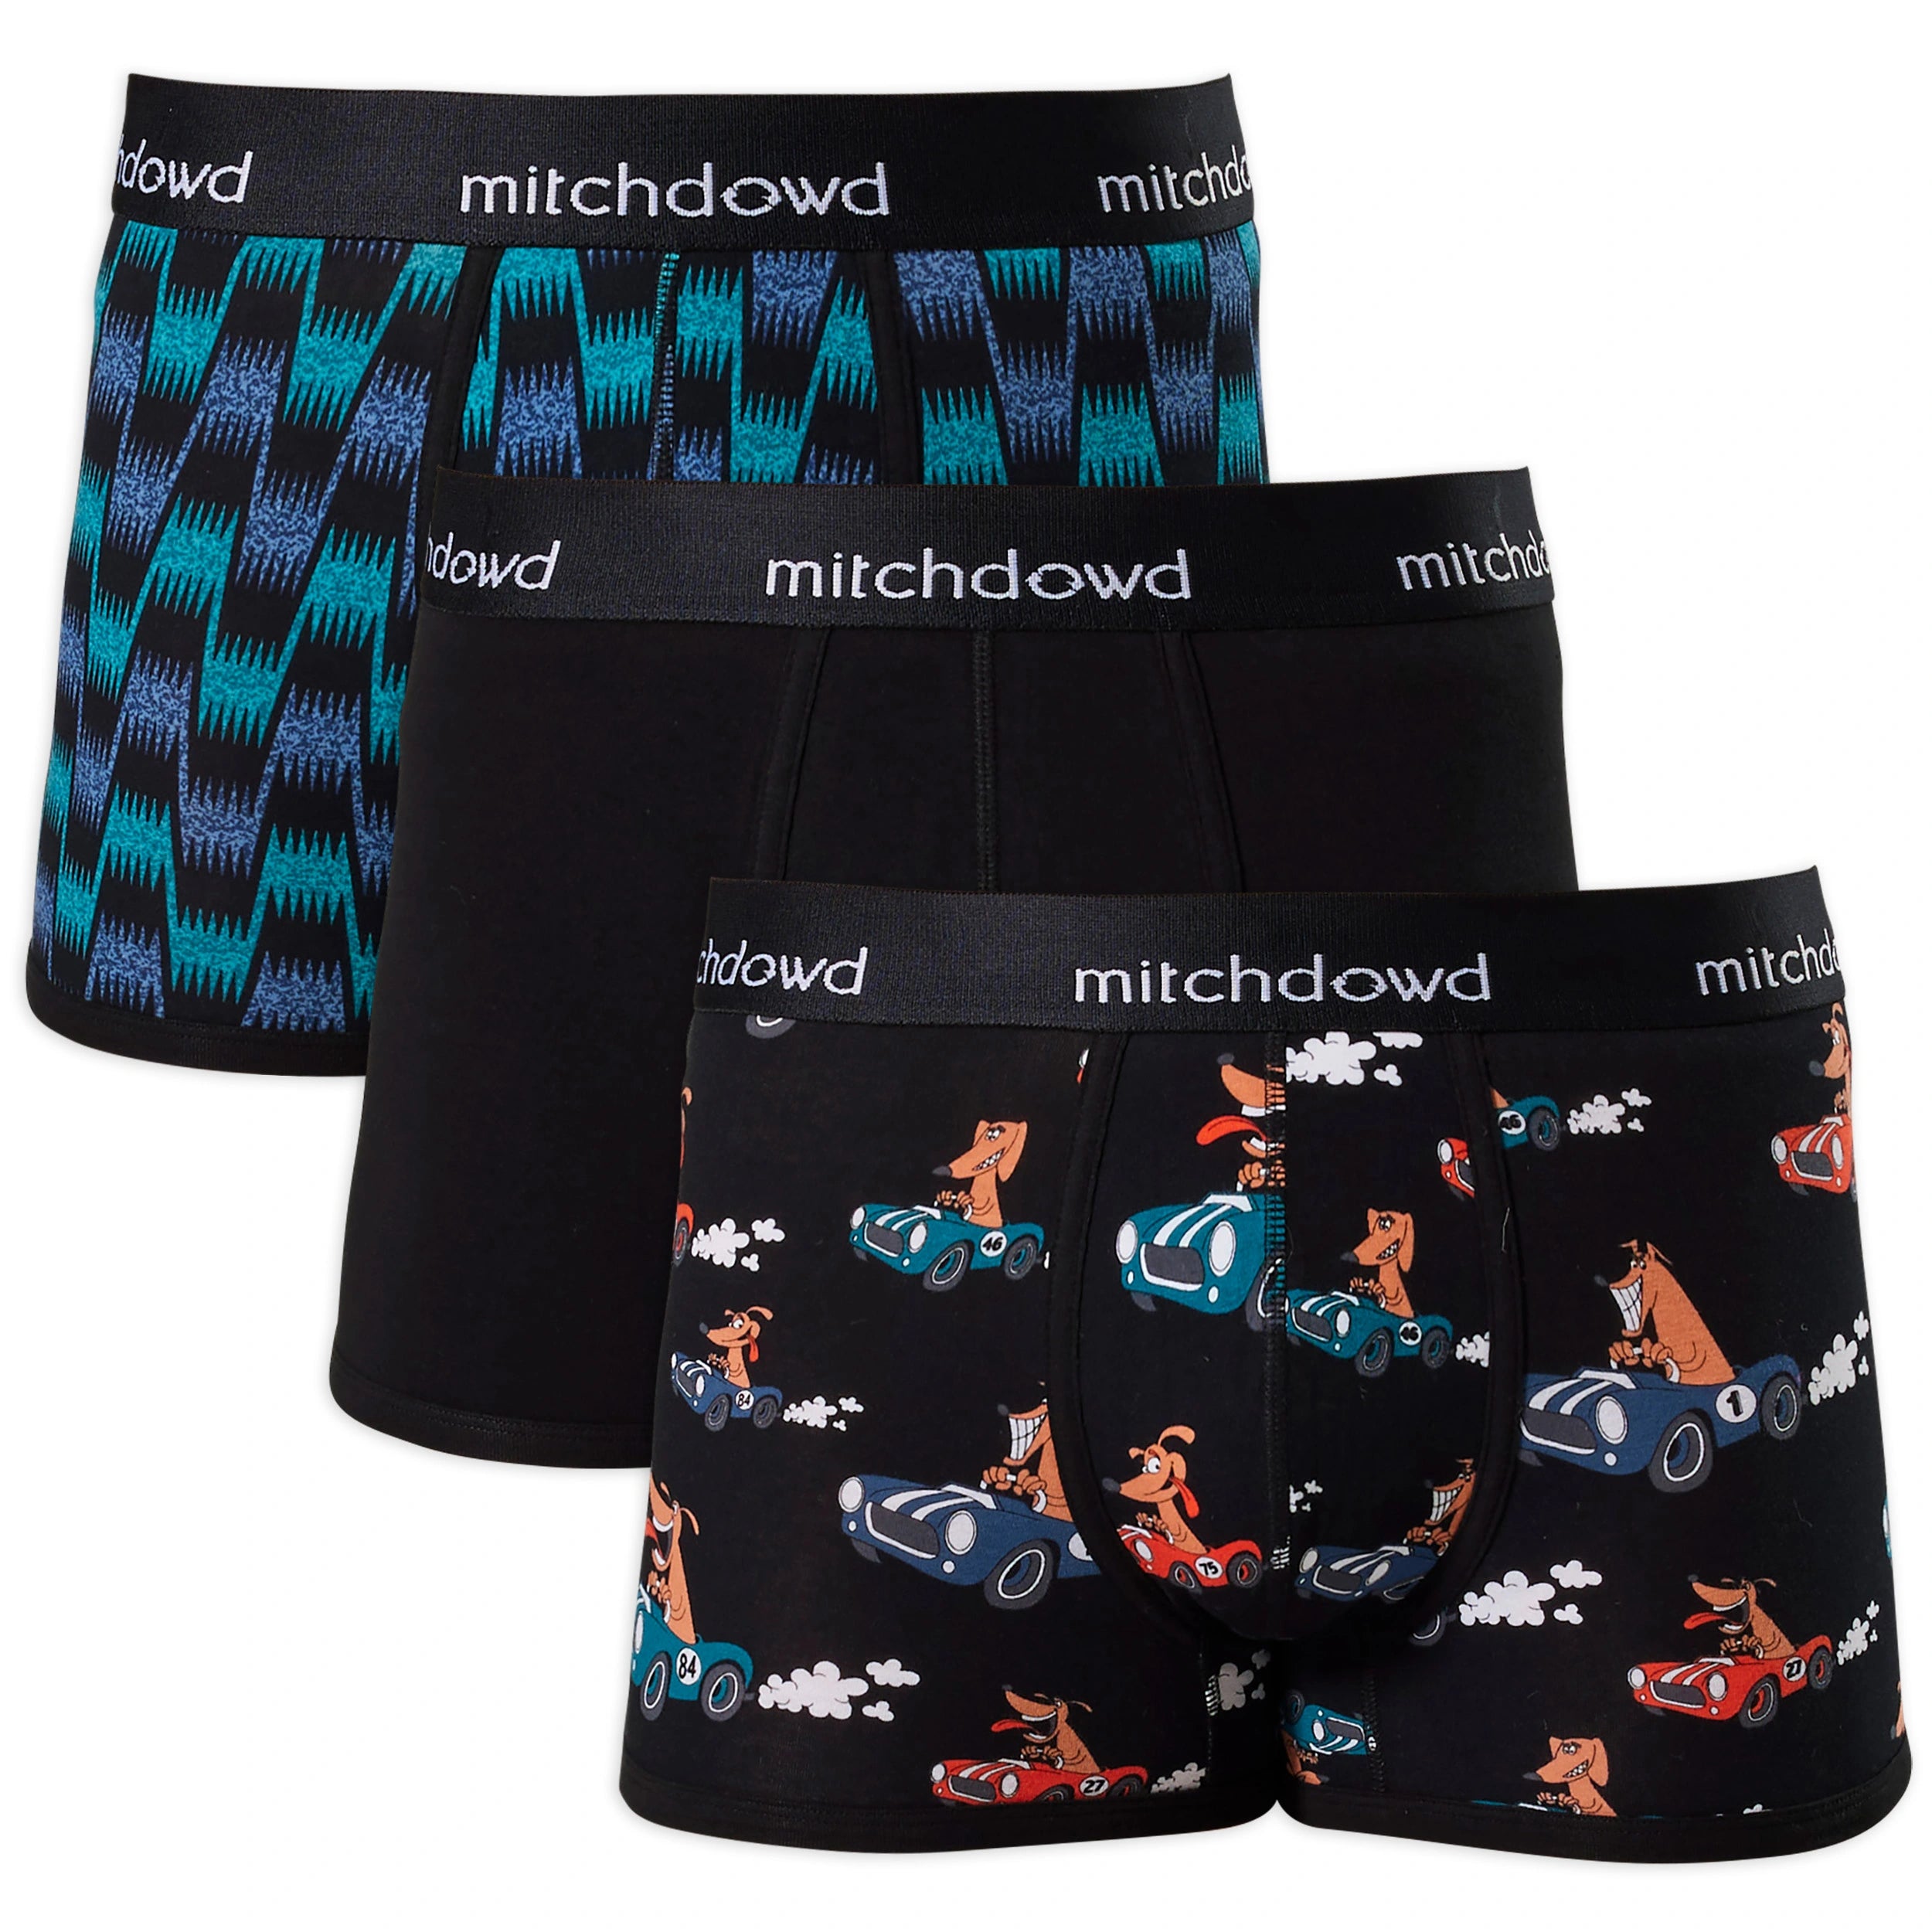 Mitch Dowd Men's Dog & Bone Cotton Loose Fit Knit Boxer Shorts 3